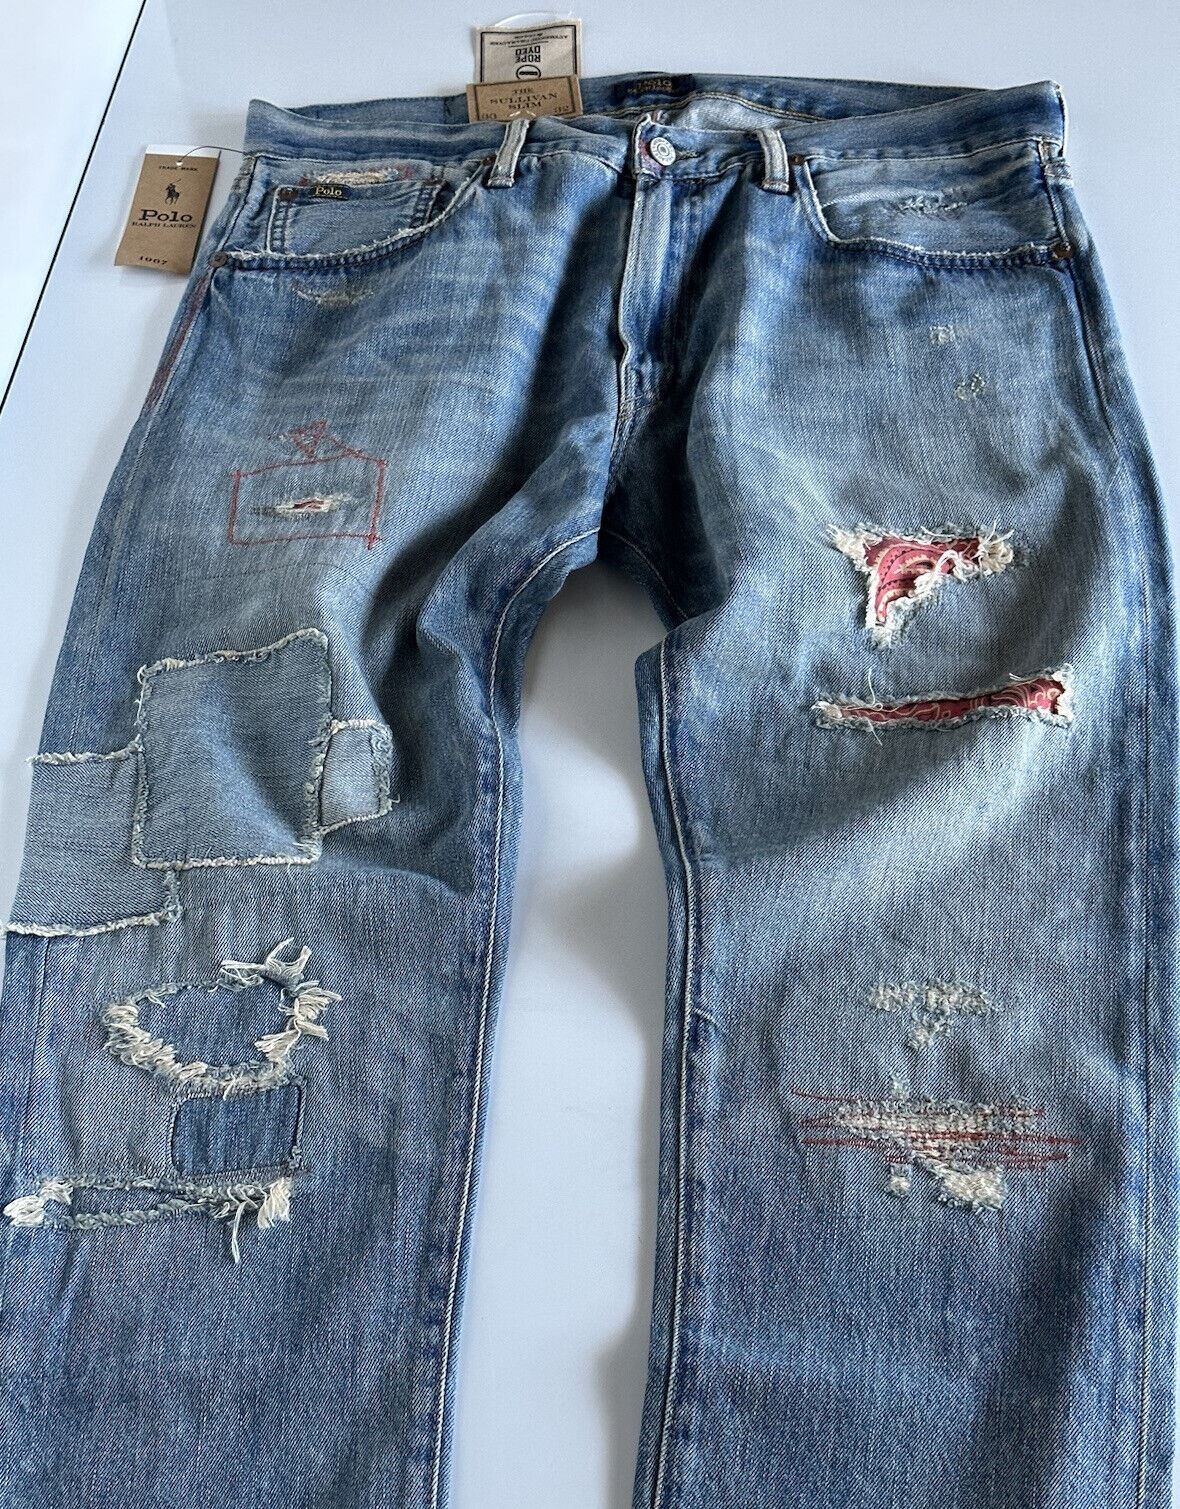 Neu mit Etikett: 188 $ Polo Ralph Lauren The Sullivan Slim Blue Jeans 33/32